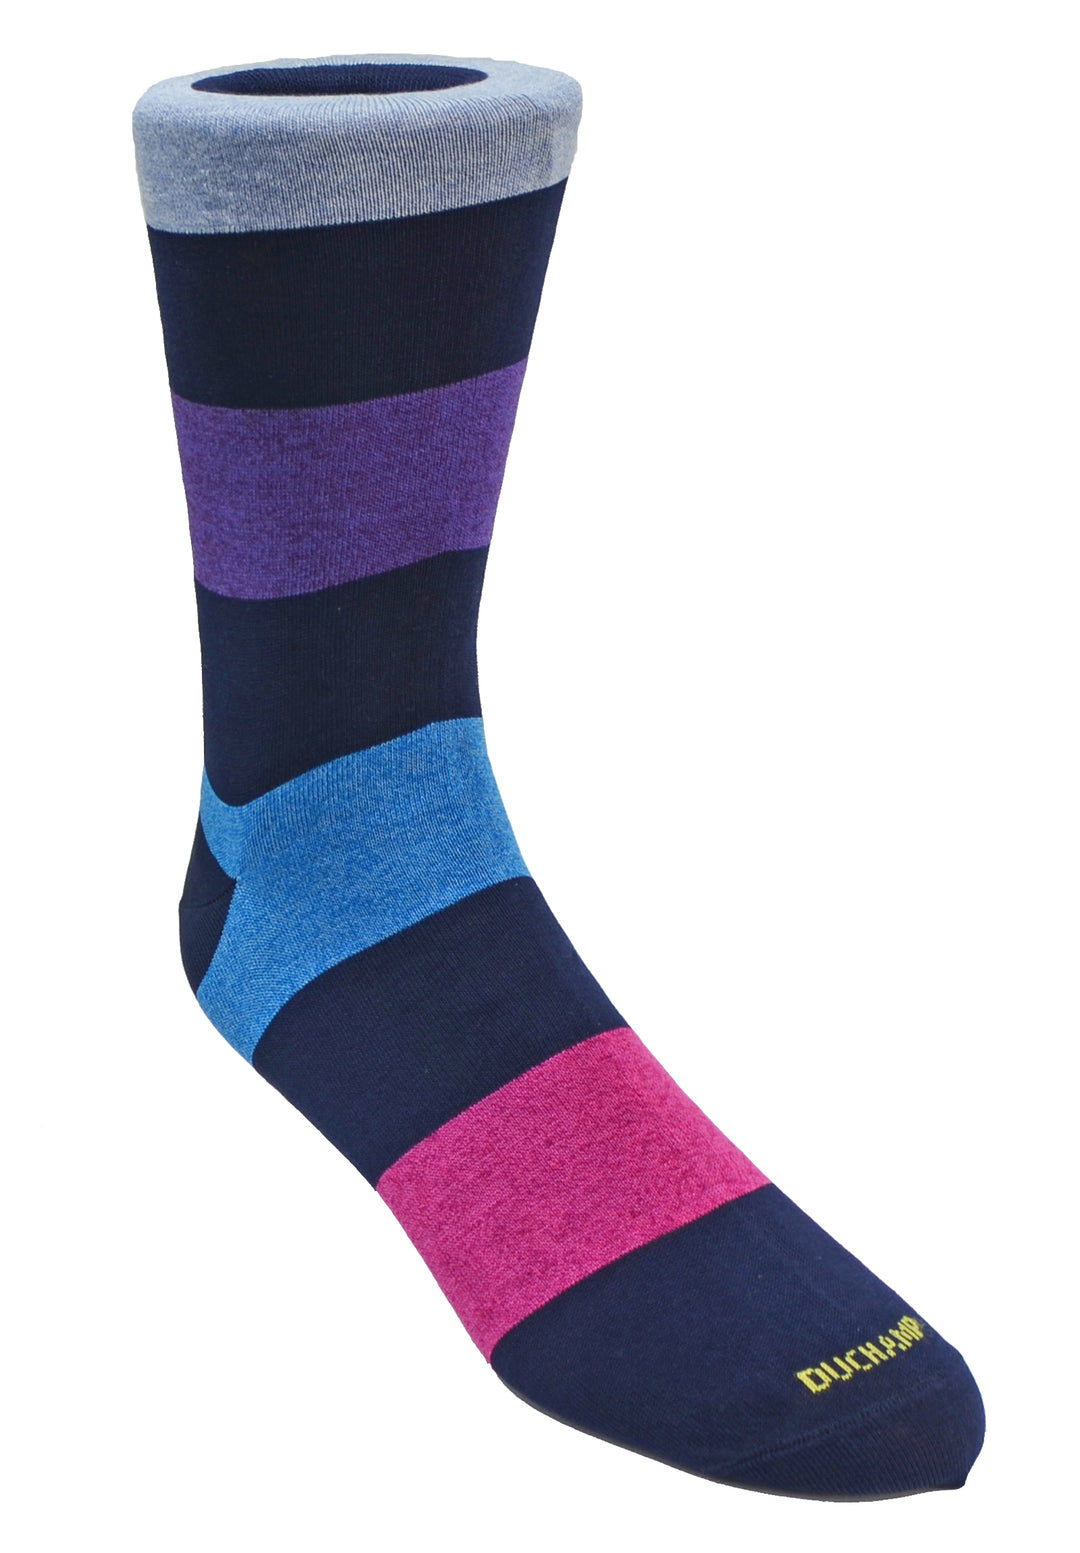 Duchamp London Color-Block Socks